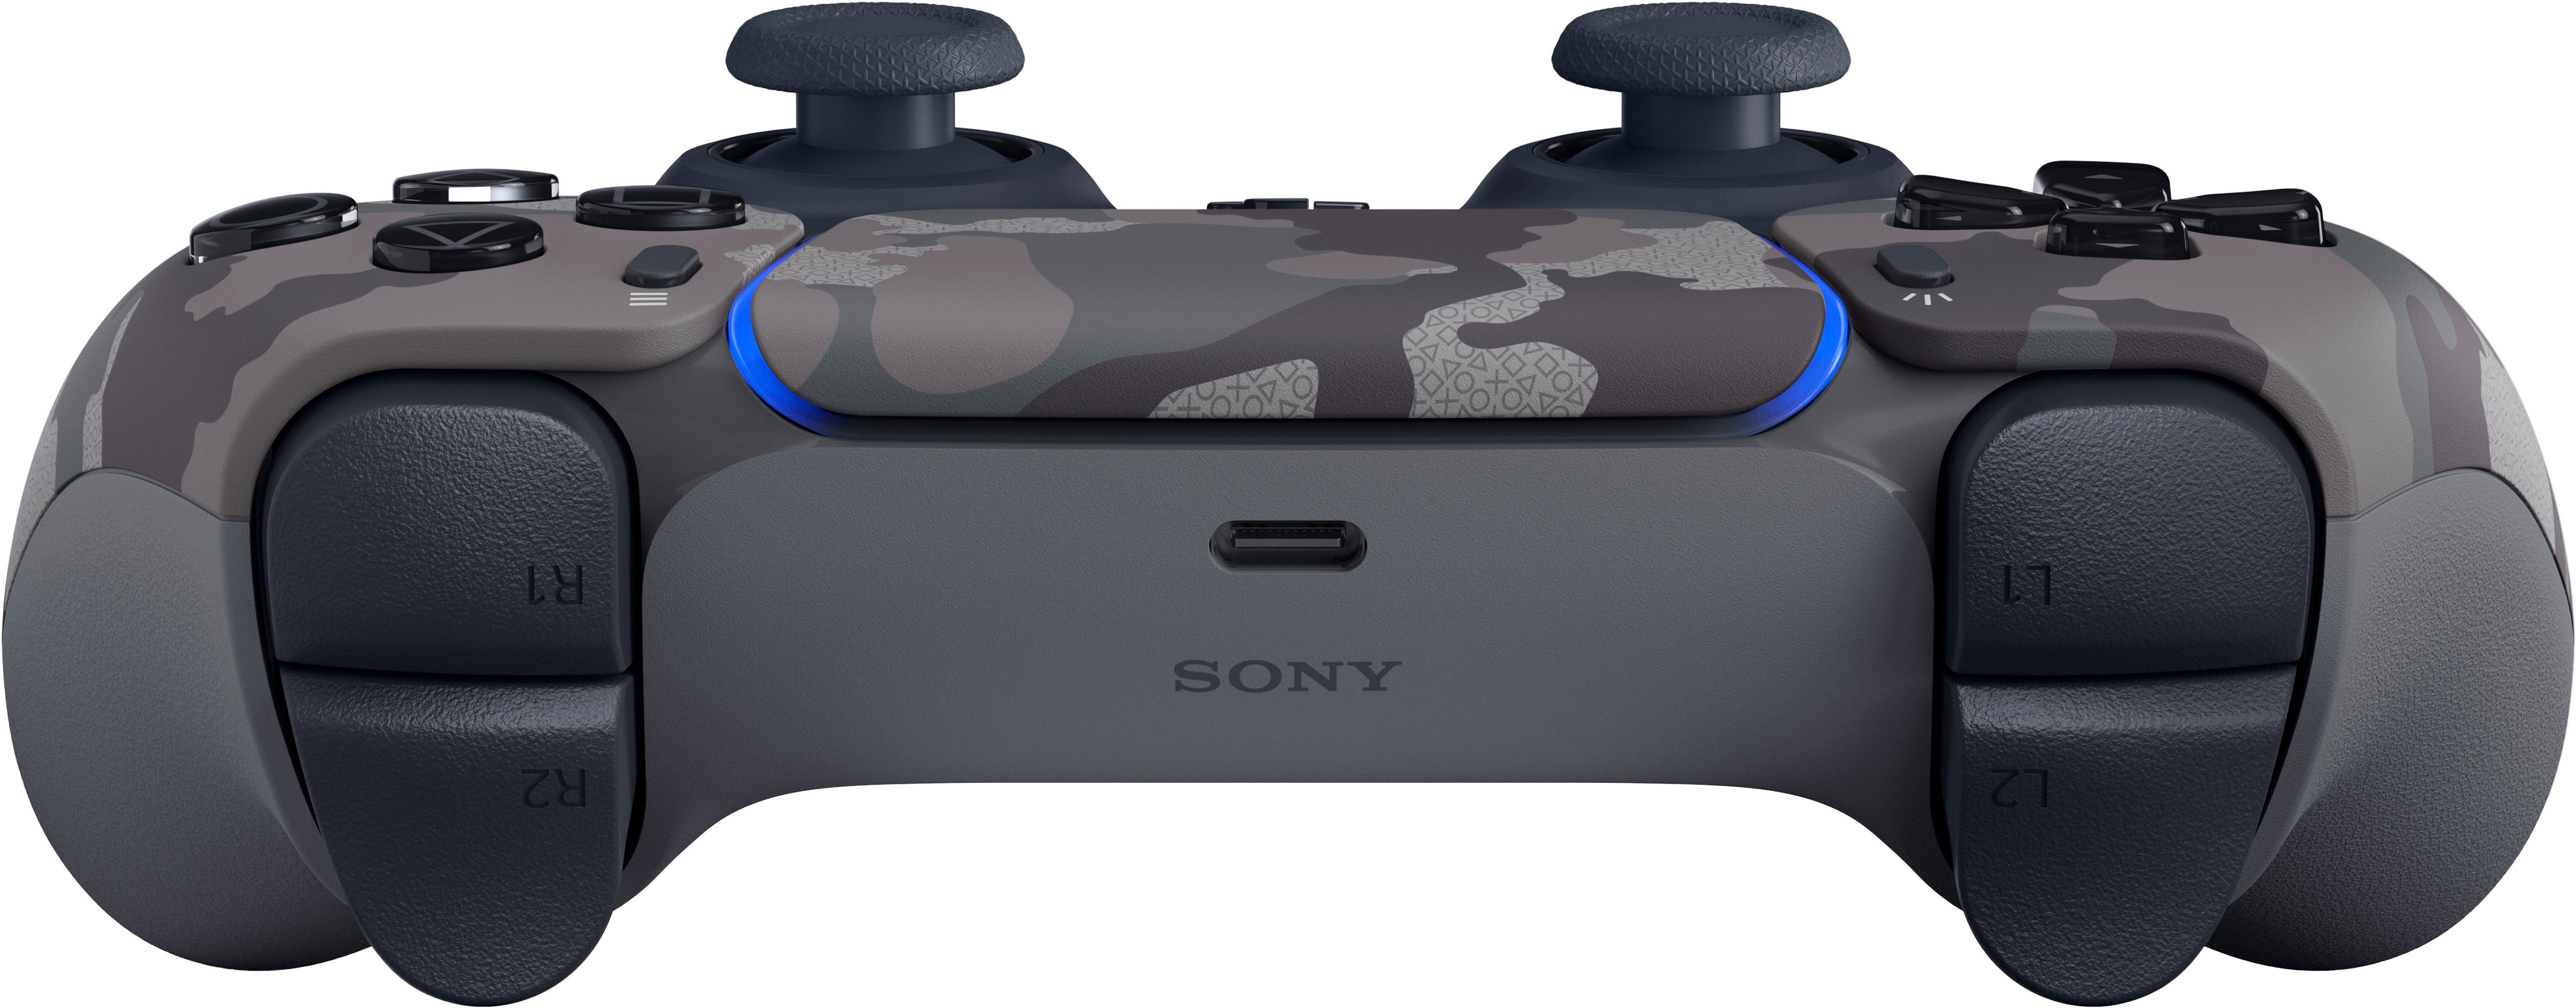 Sony PlayStation 5 Slim Digital Console with Extra Gray Camo